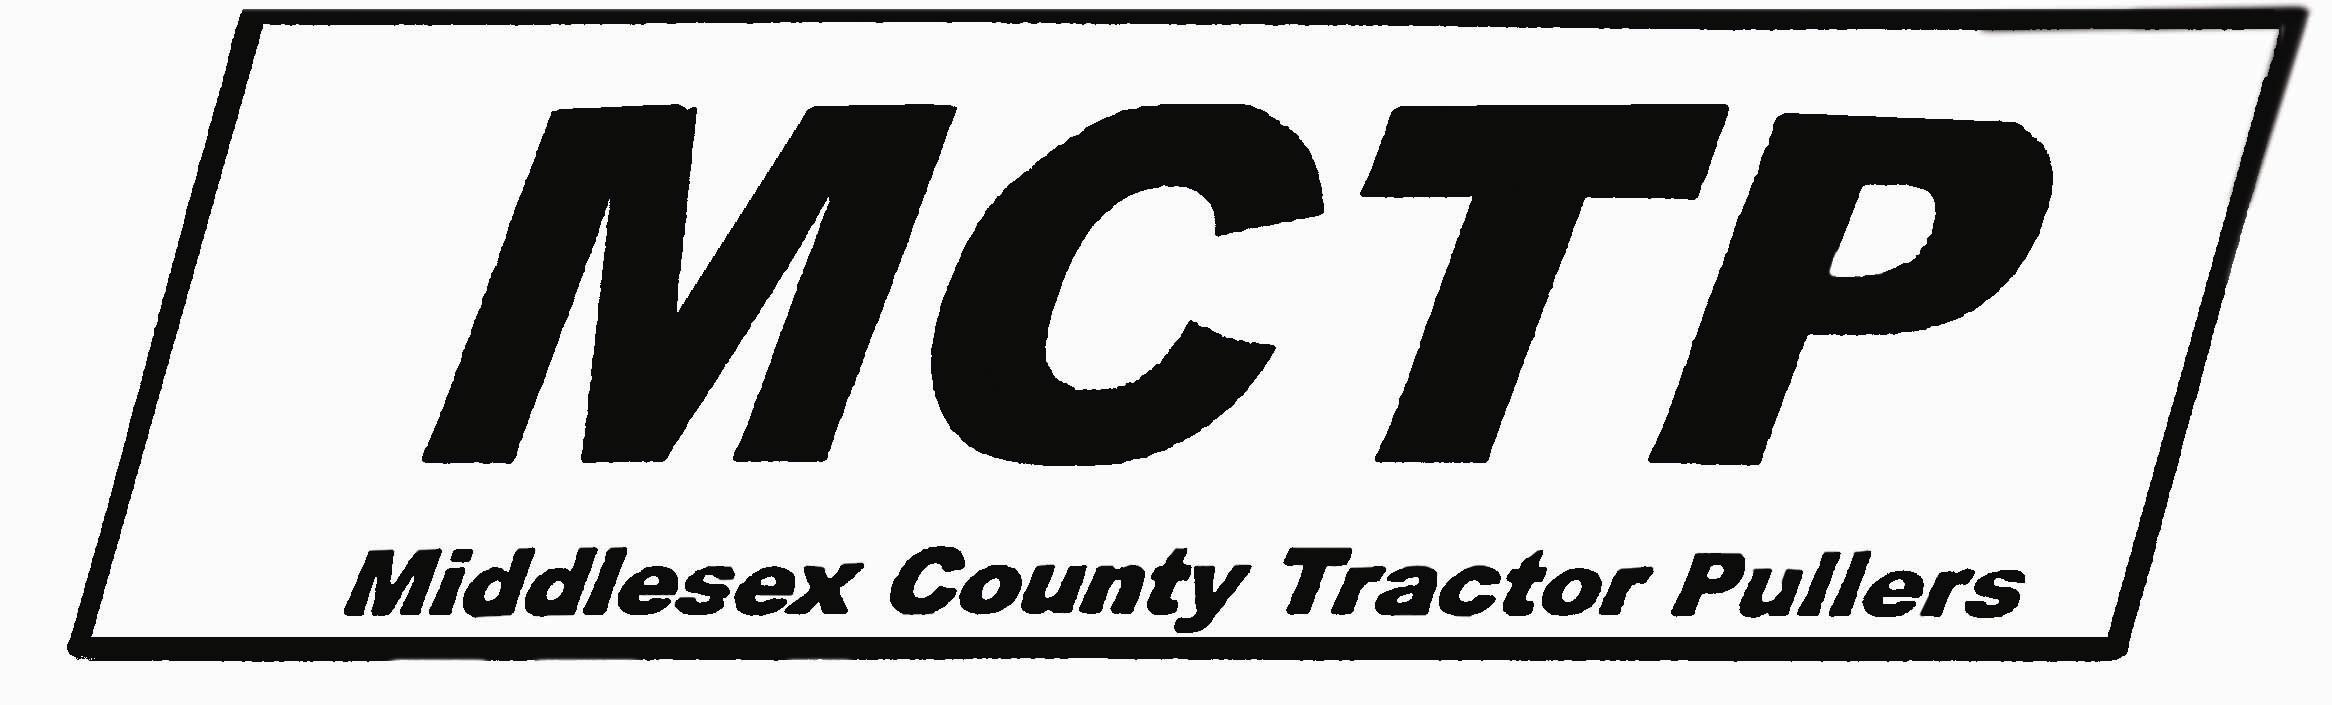 MCTP Logo copy